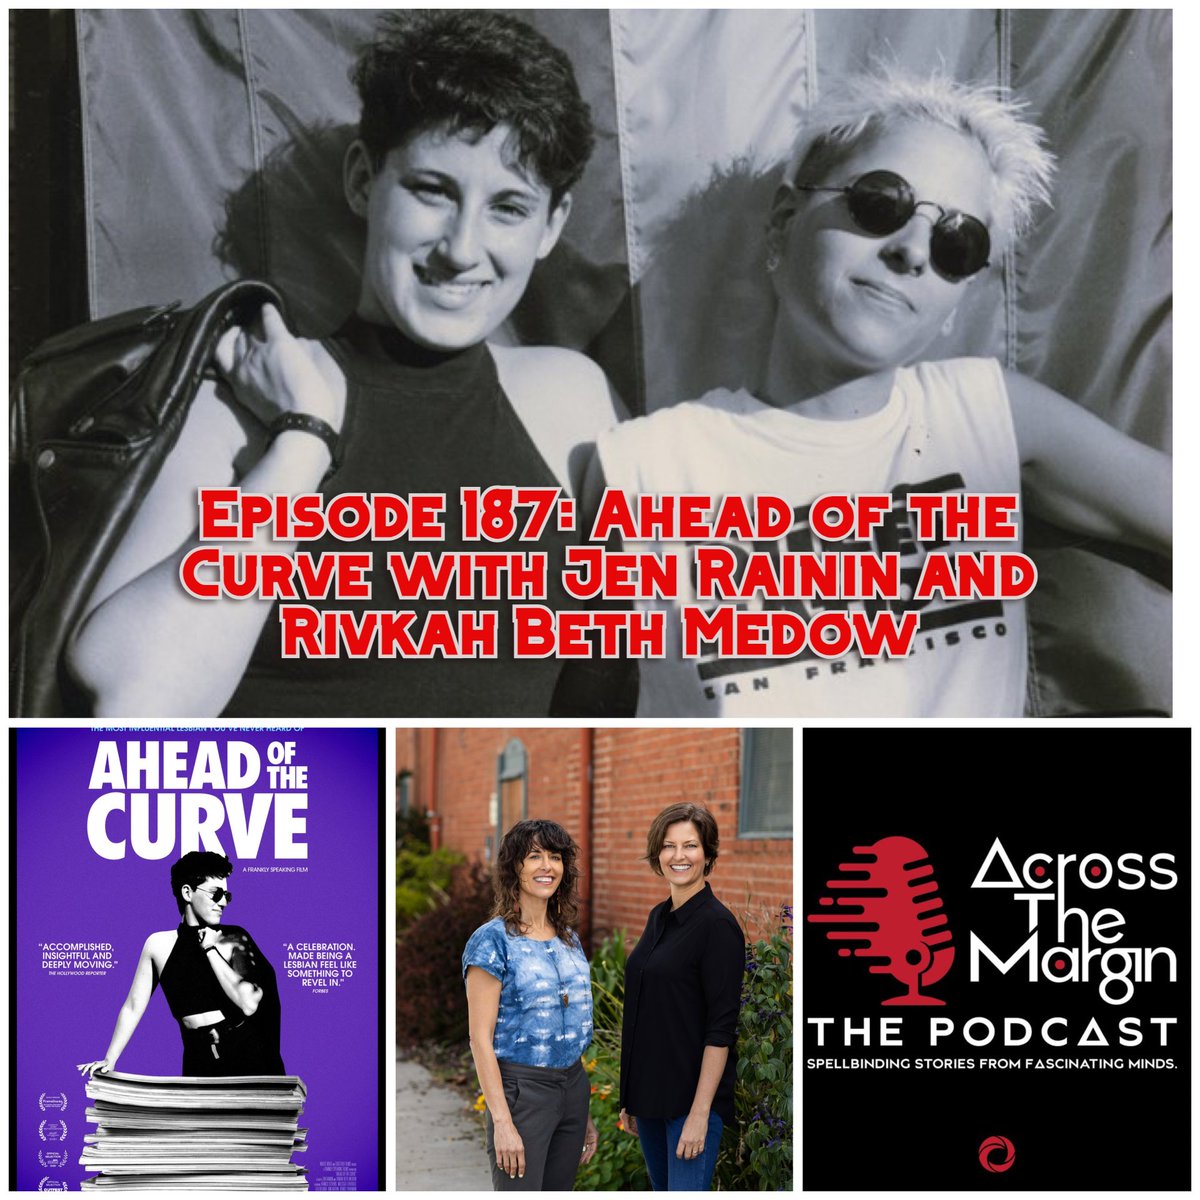 Across The Margin: The Podcast celebrates lesbian-rights icon Franco Stevens through an interview with directors Jen Rainin and Rivkah Beth Medow! @CurveFdn @CurveMagMovie @osirispod #AheadofTheCurve Apple:podcasts.apple.com/us/podcast/acr… Spotify:open.spotify.com/episode/5frddI…